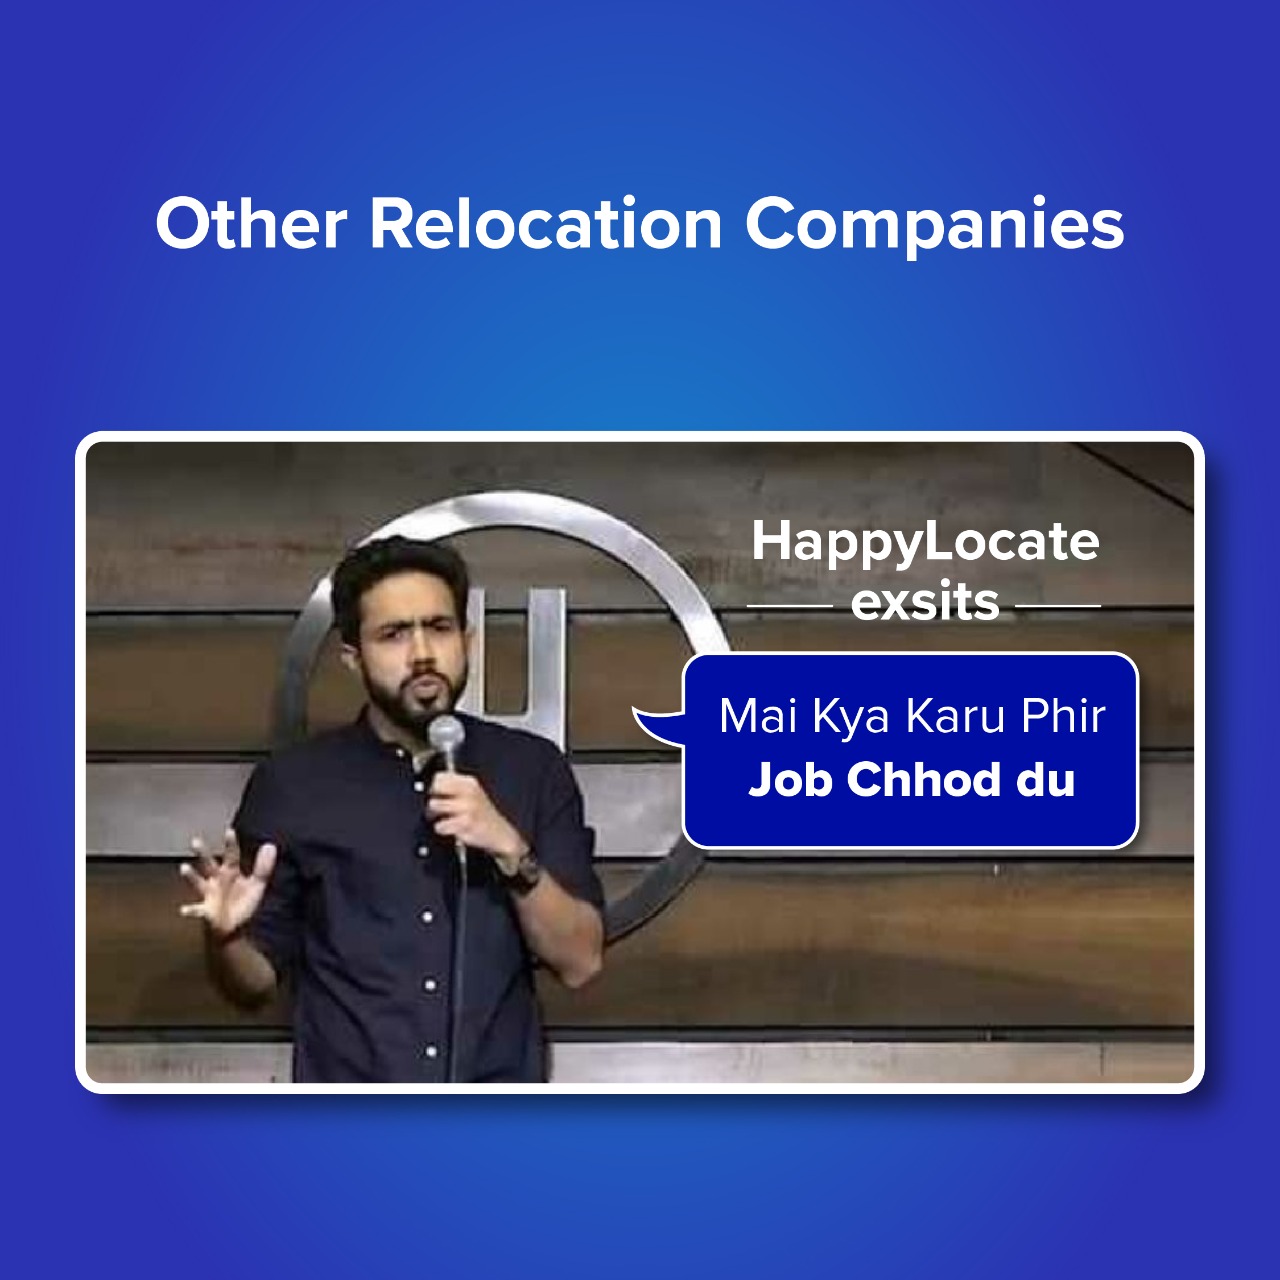 Other Relocation Companies

HappylLocate
—— exsits —

Mai Kya Karu Phir

Job Chhod du